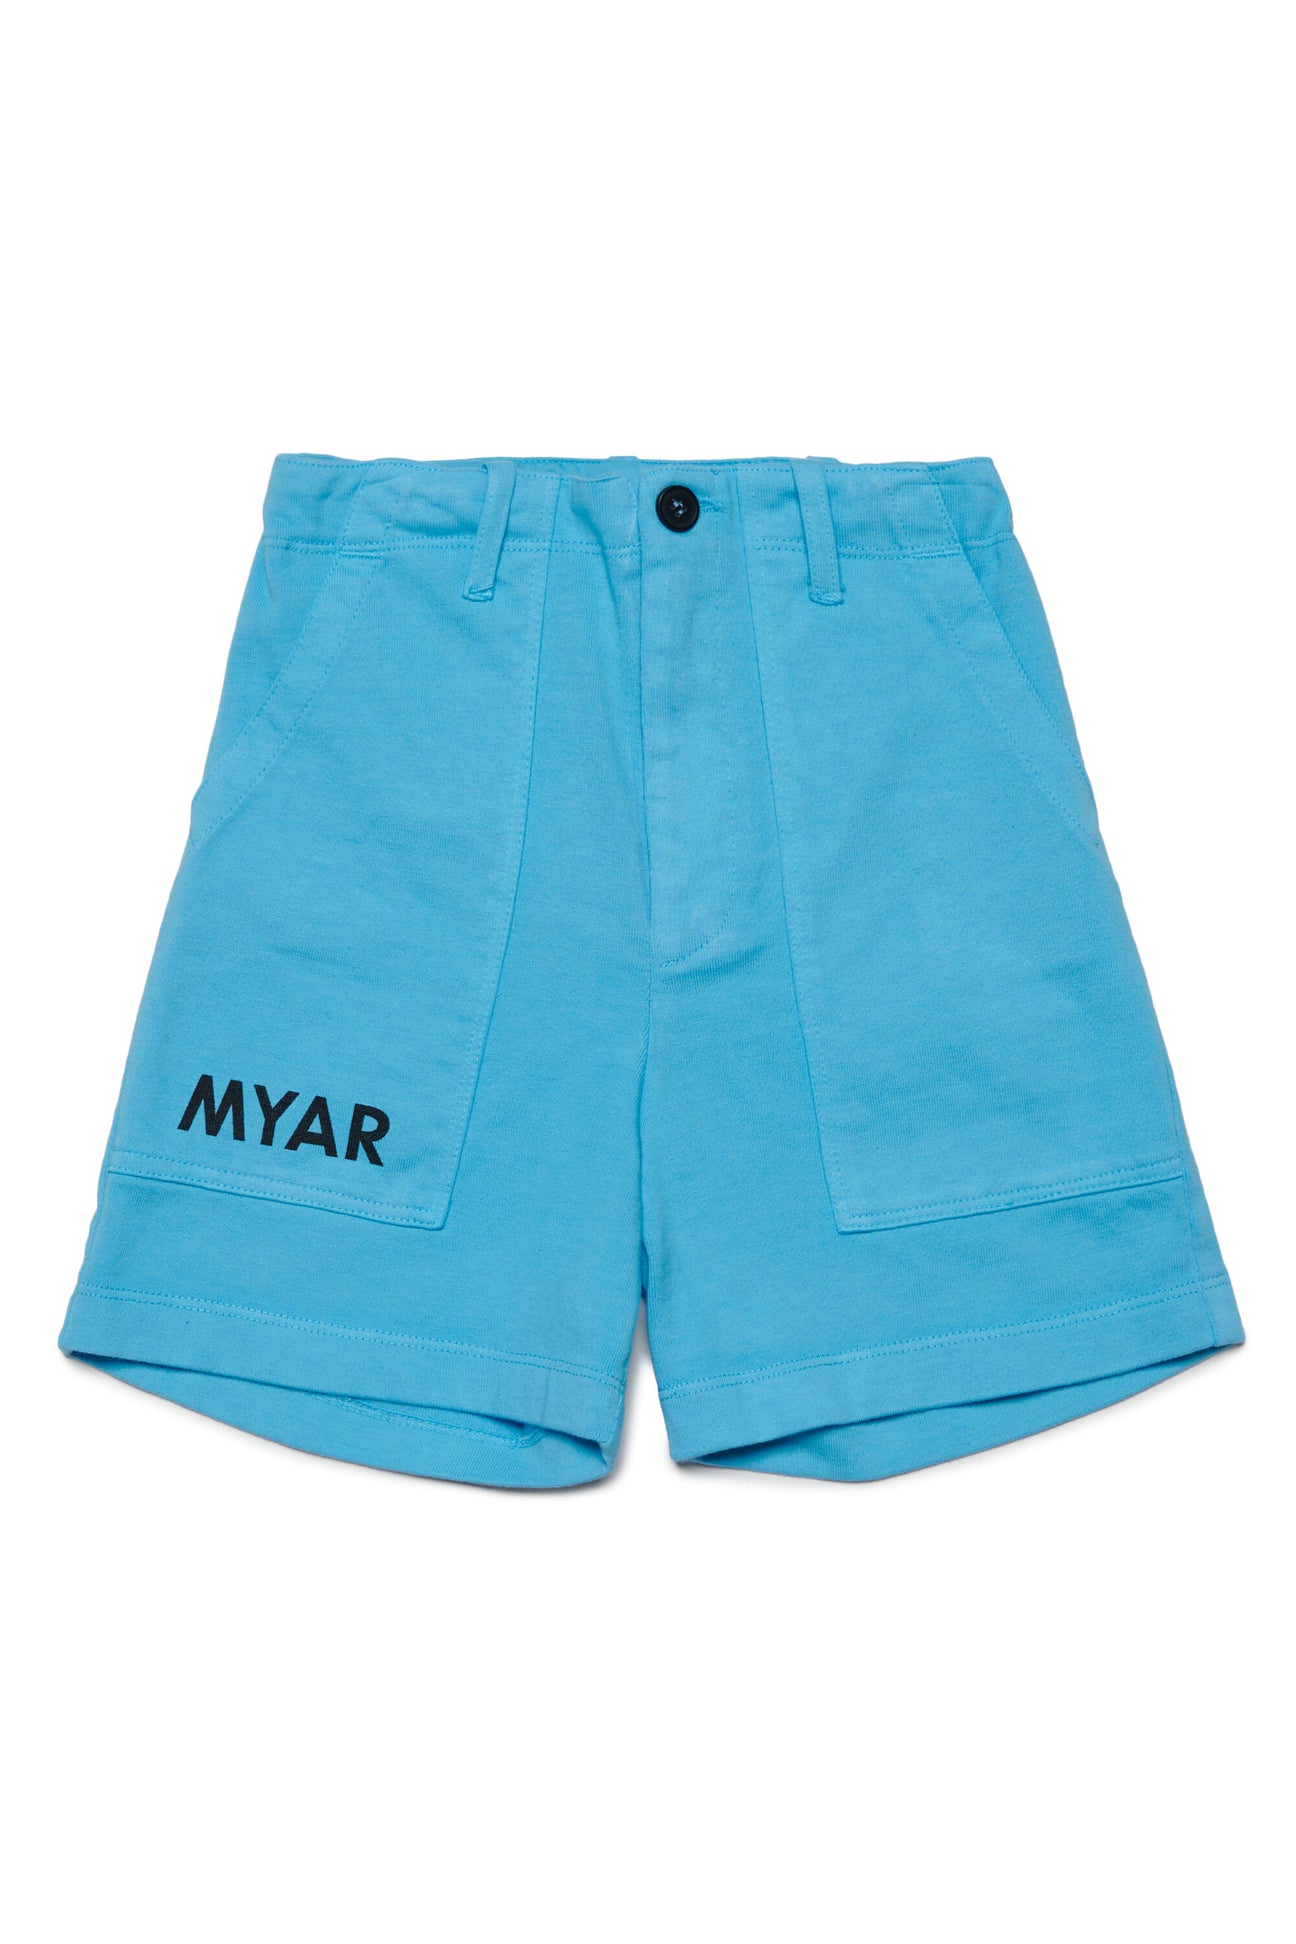 Utility shorts with MYAR logo Utility shorts with MYAR logo